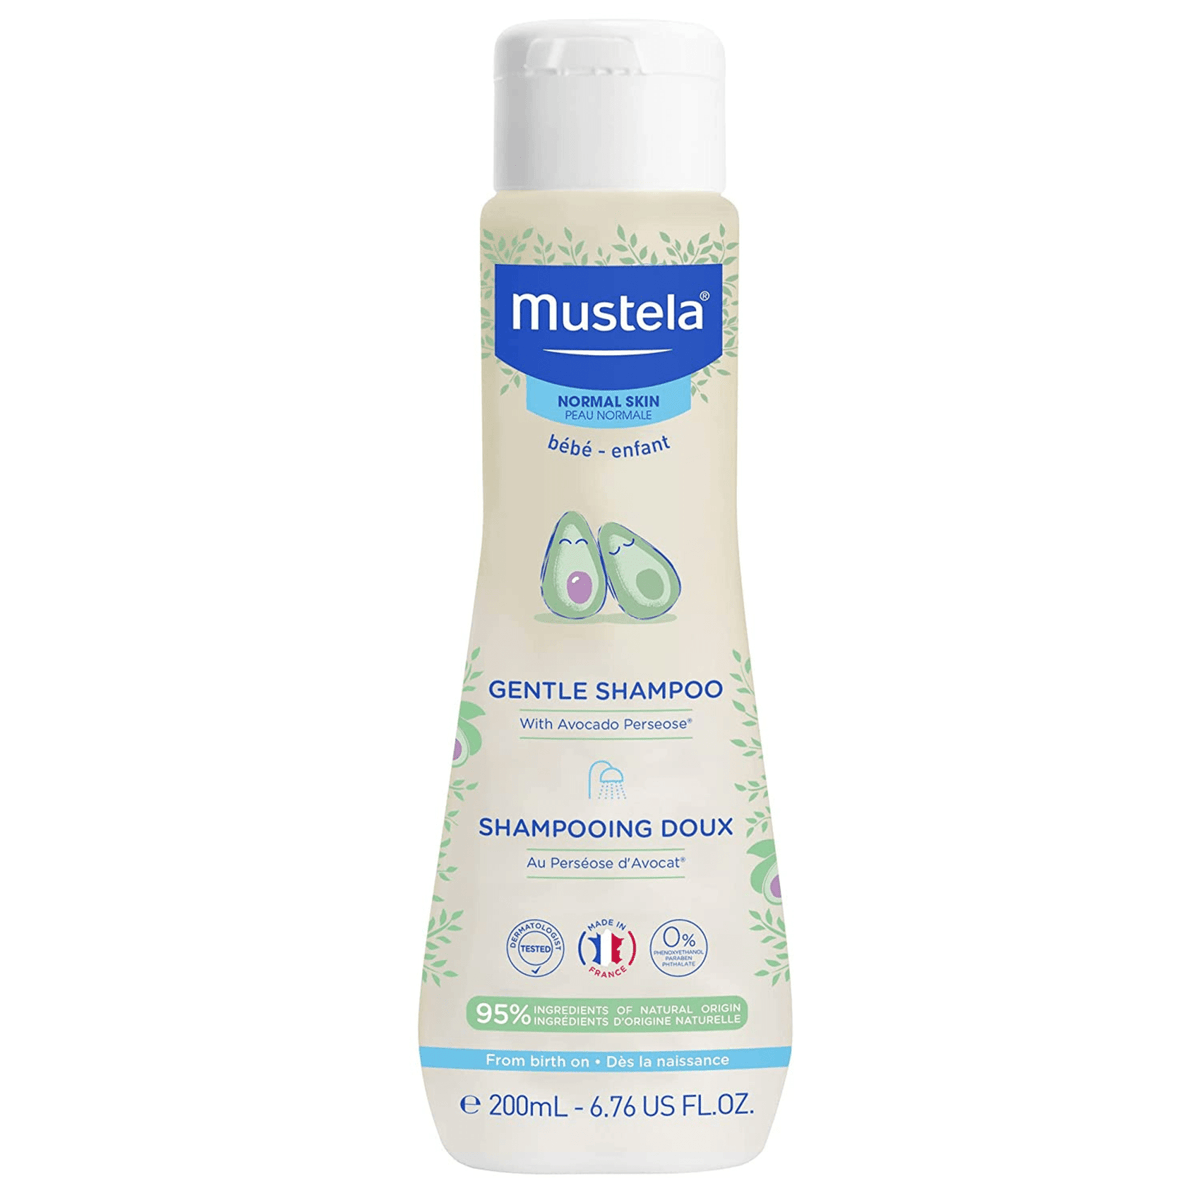 Primary Image of Gentle Shampoo